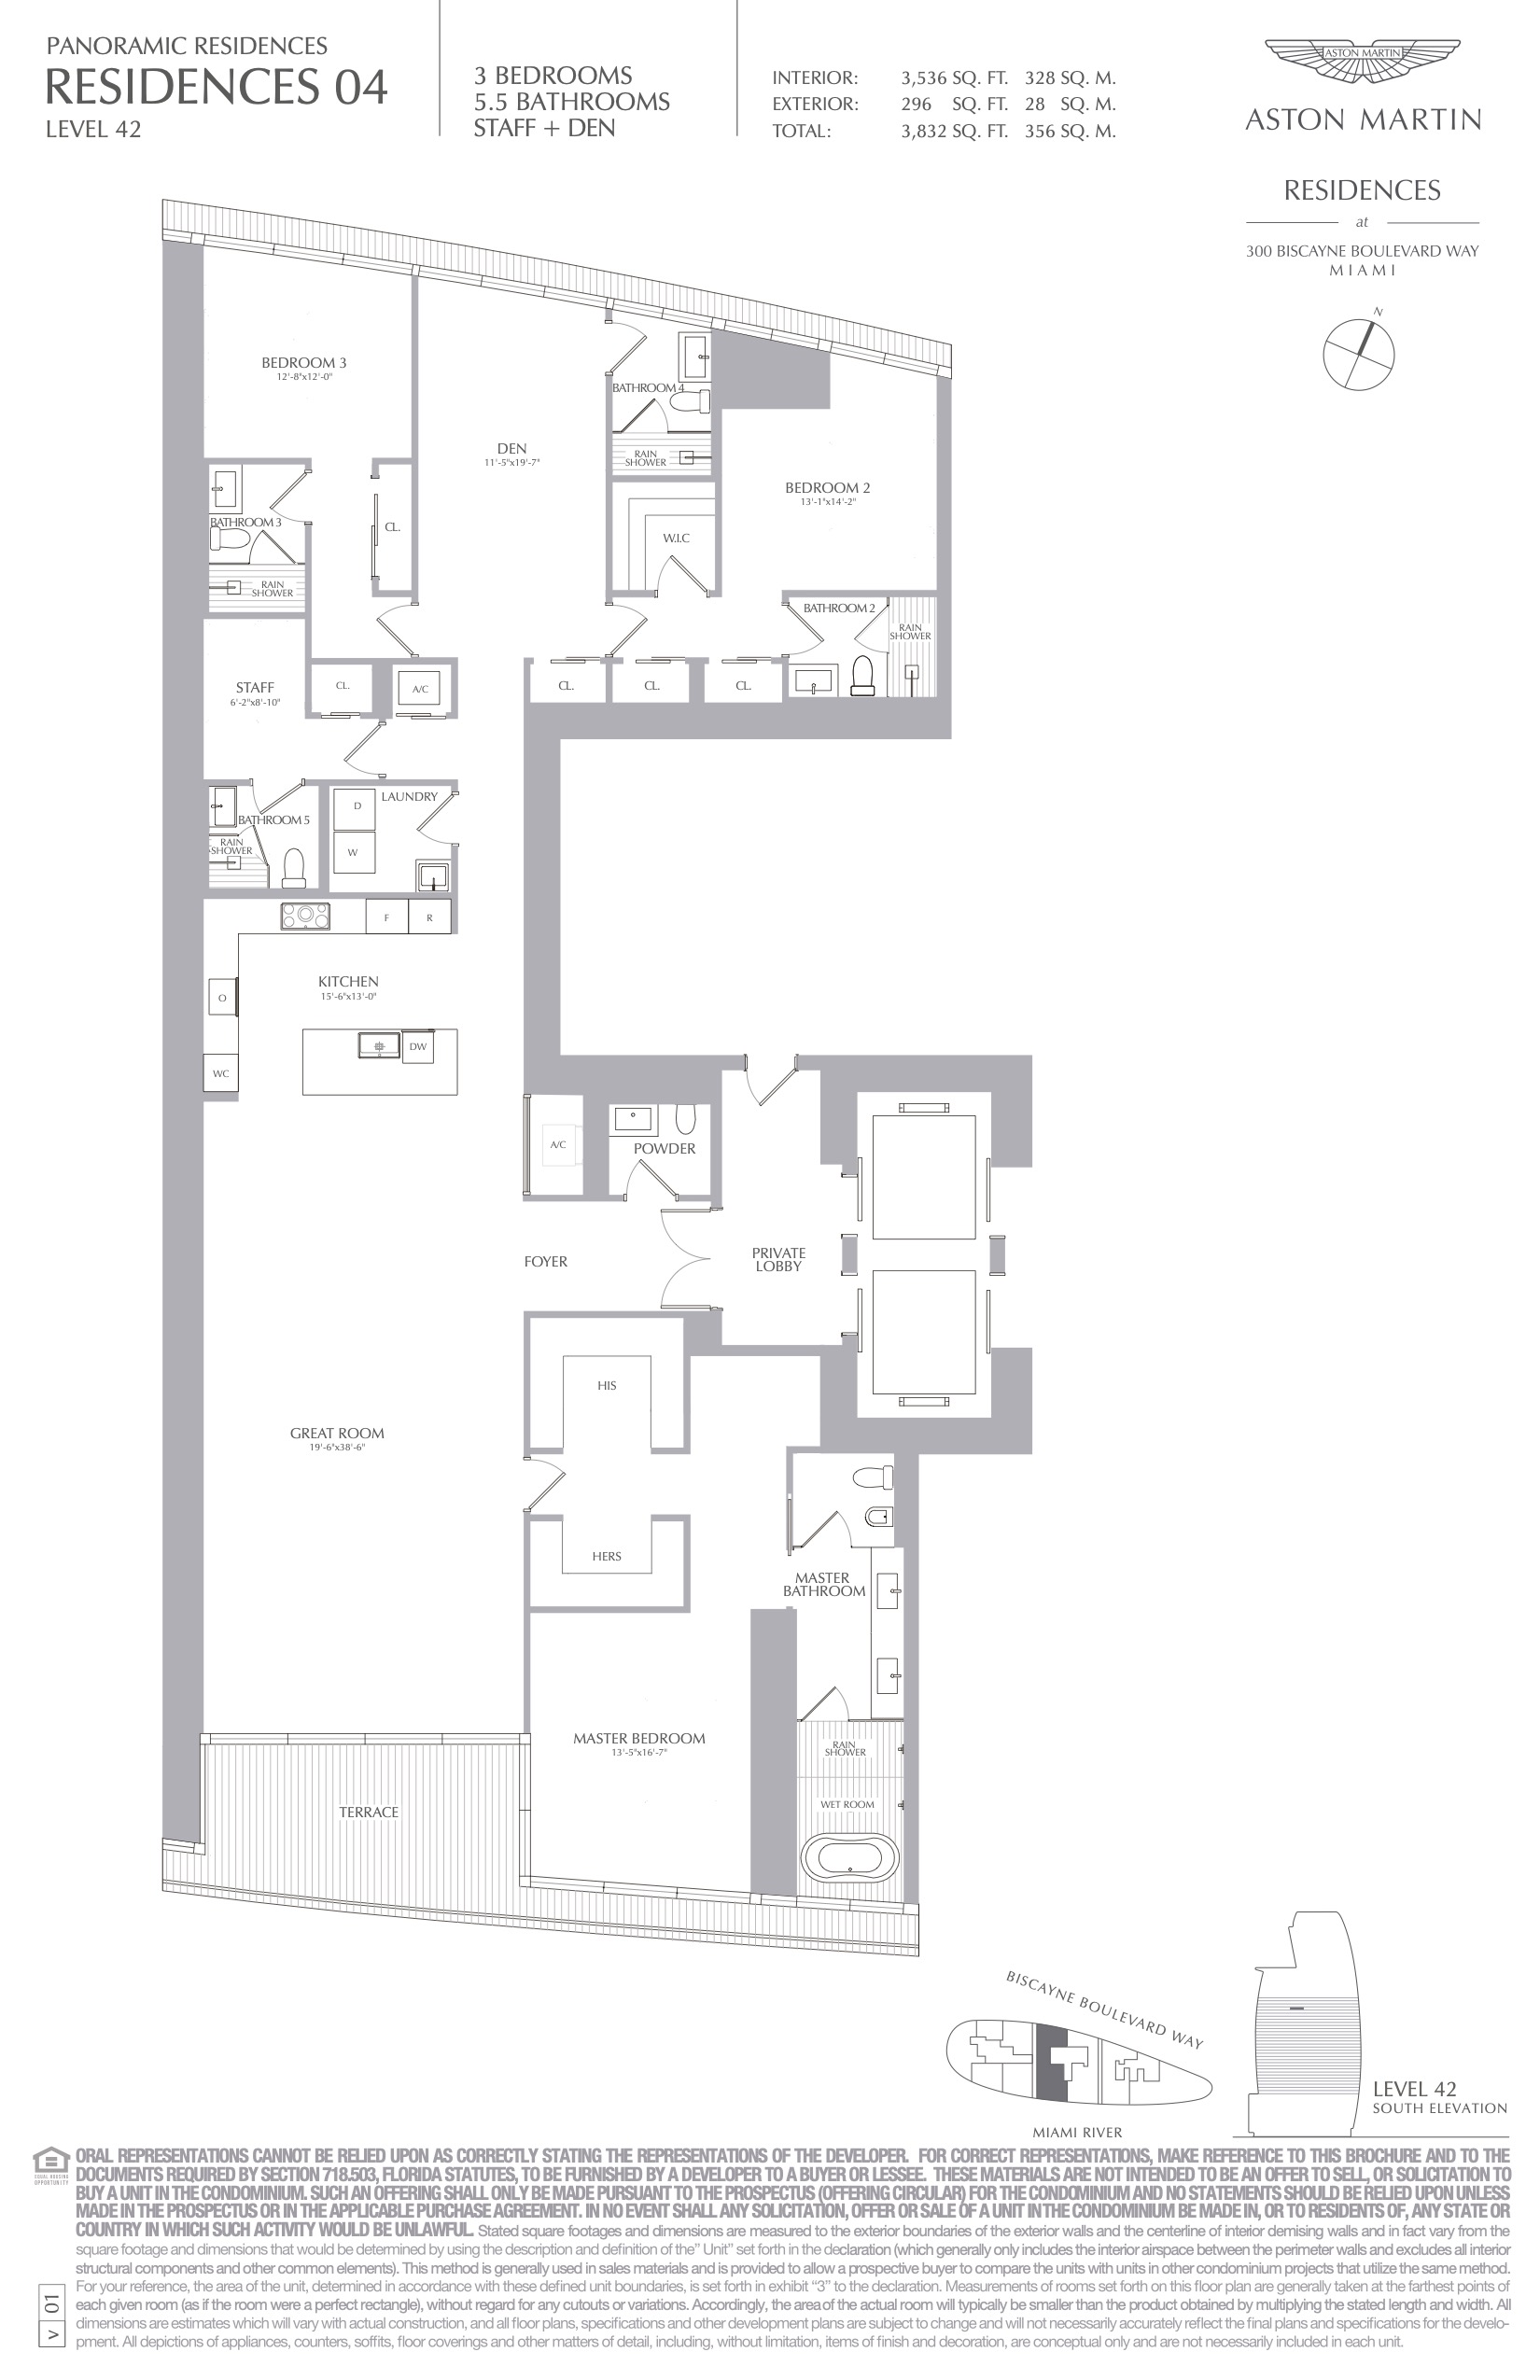 Residence 04 - Level 42